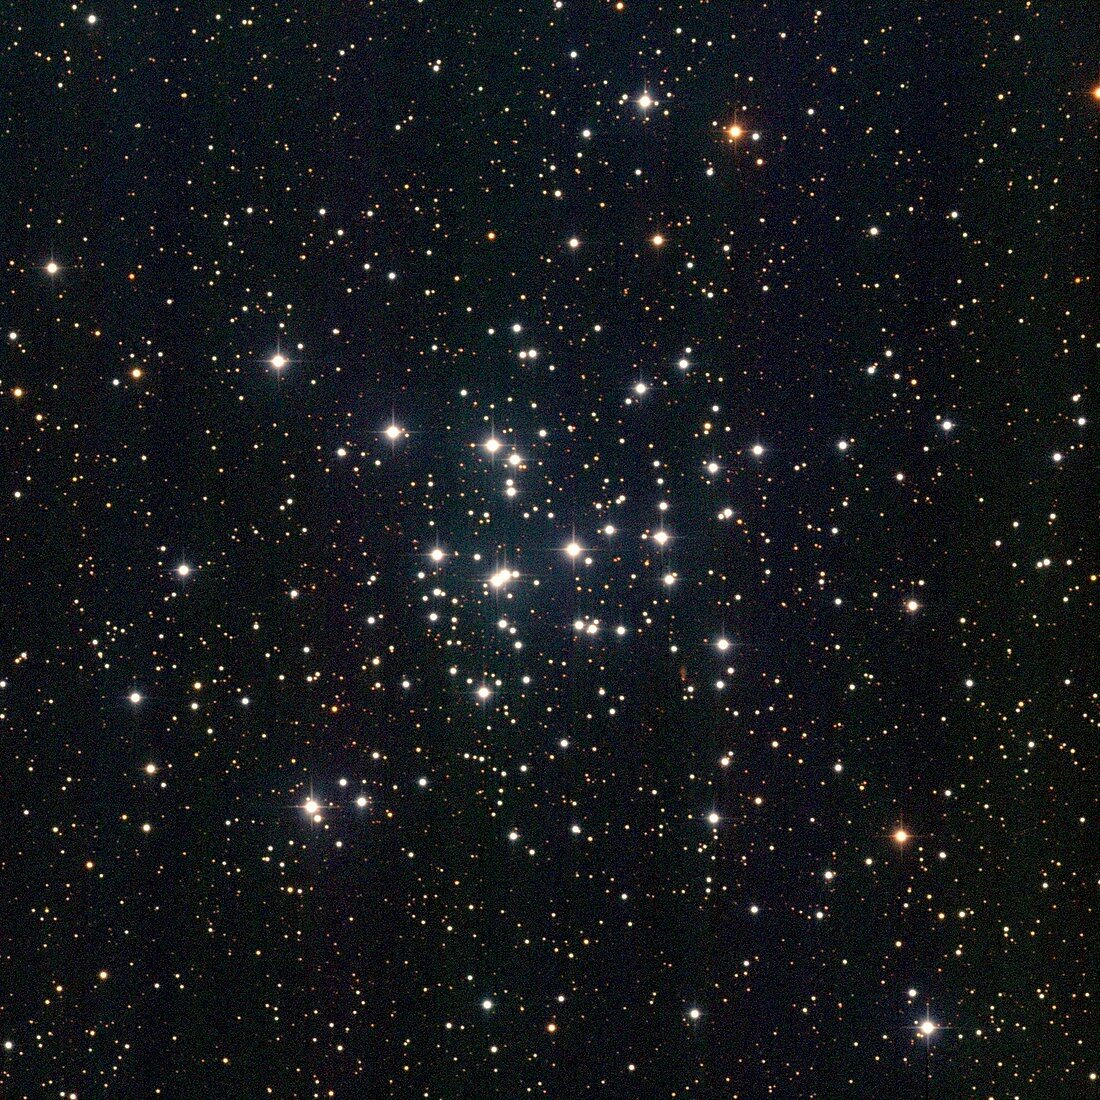 Star cluster M36